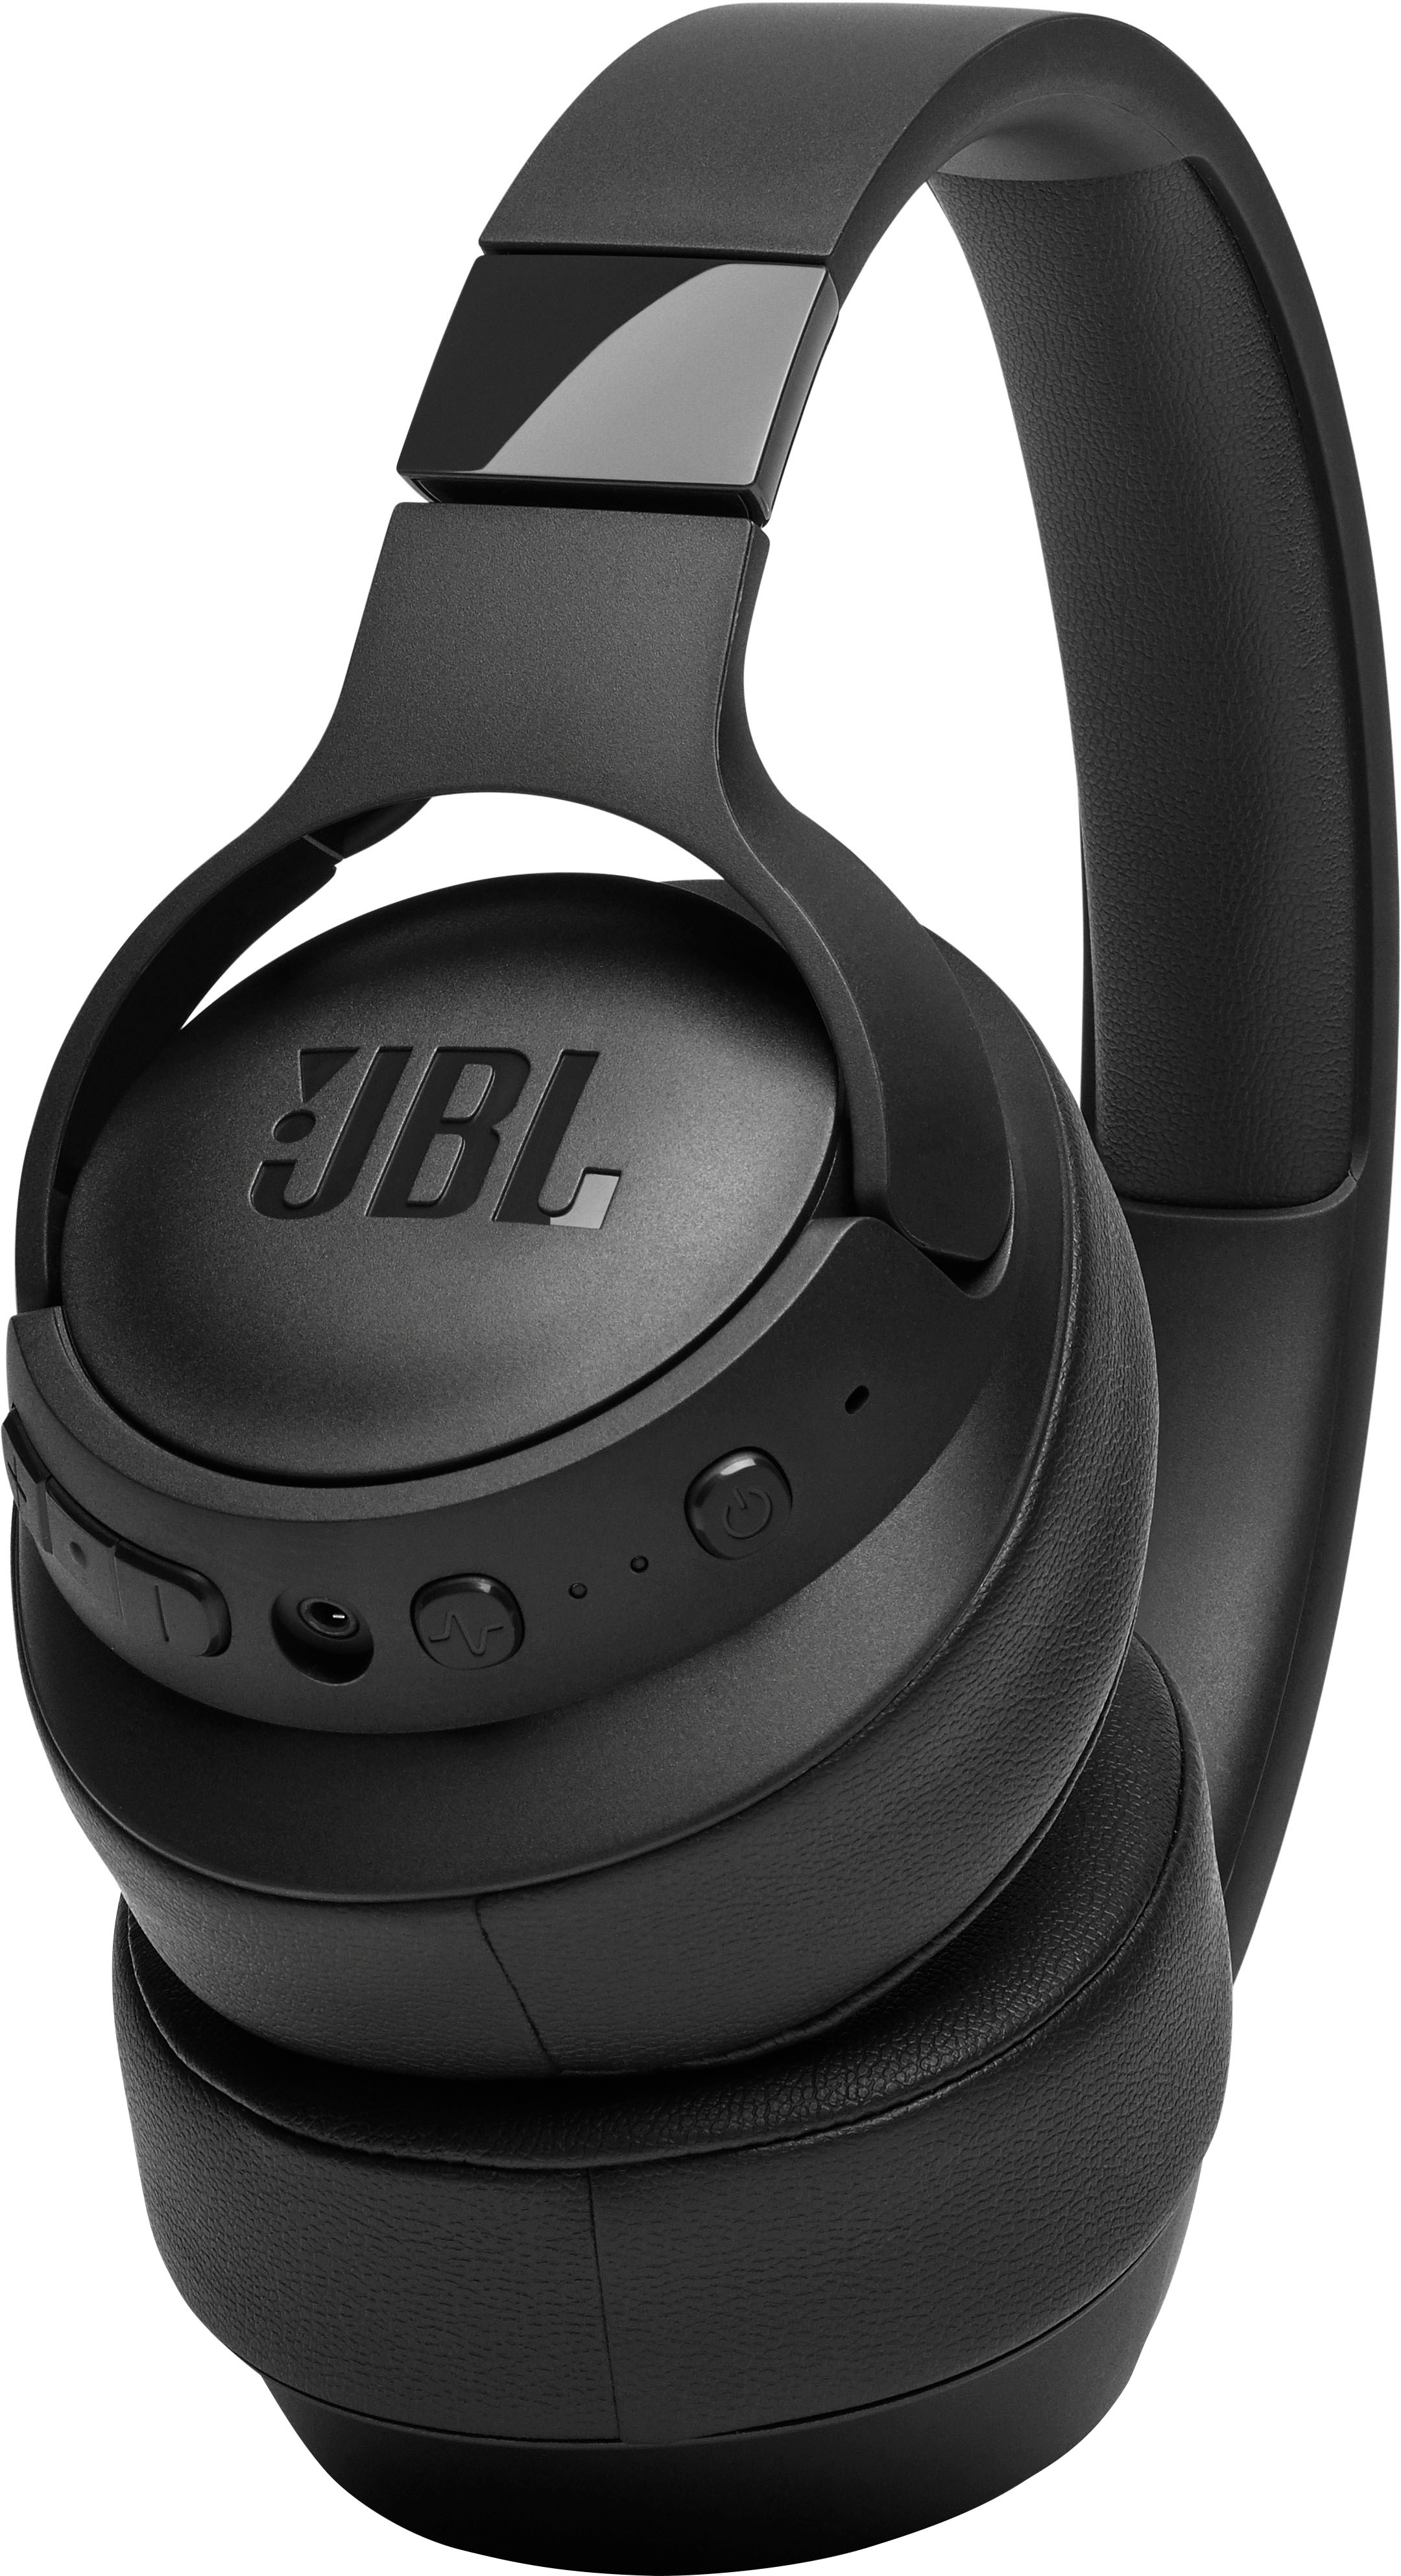 Audifonos Jbl T500 C/cable Black - $ 22.990